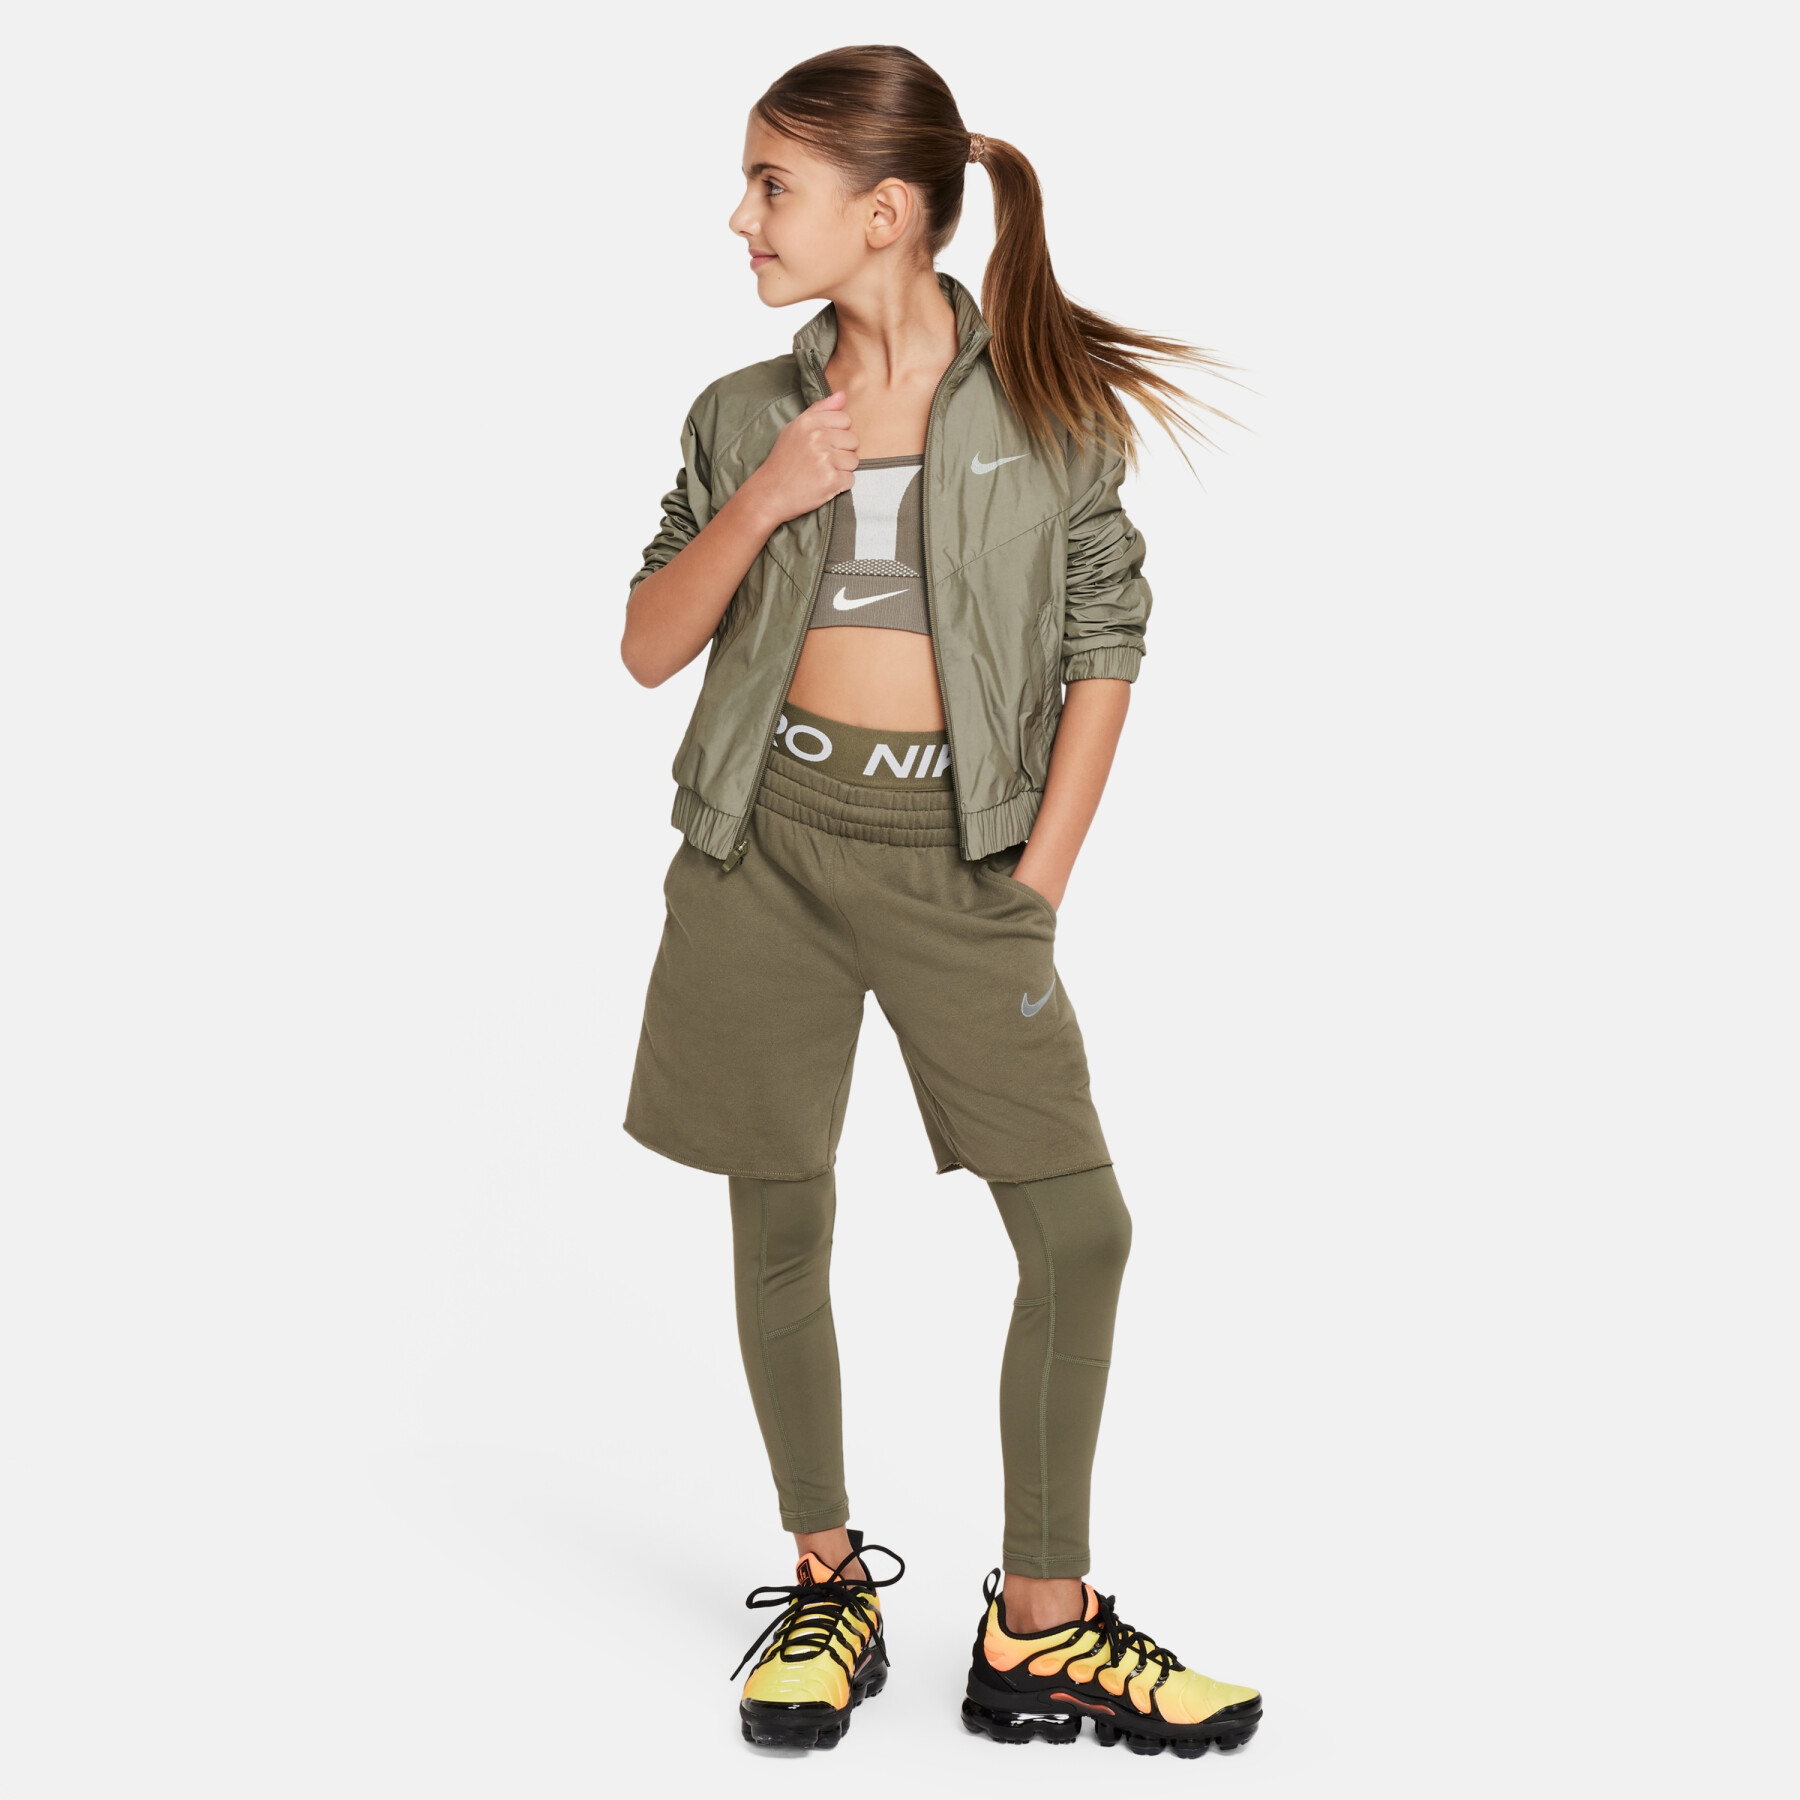 Legging to protect against leakage, girl Nike Pro